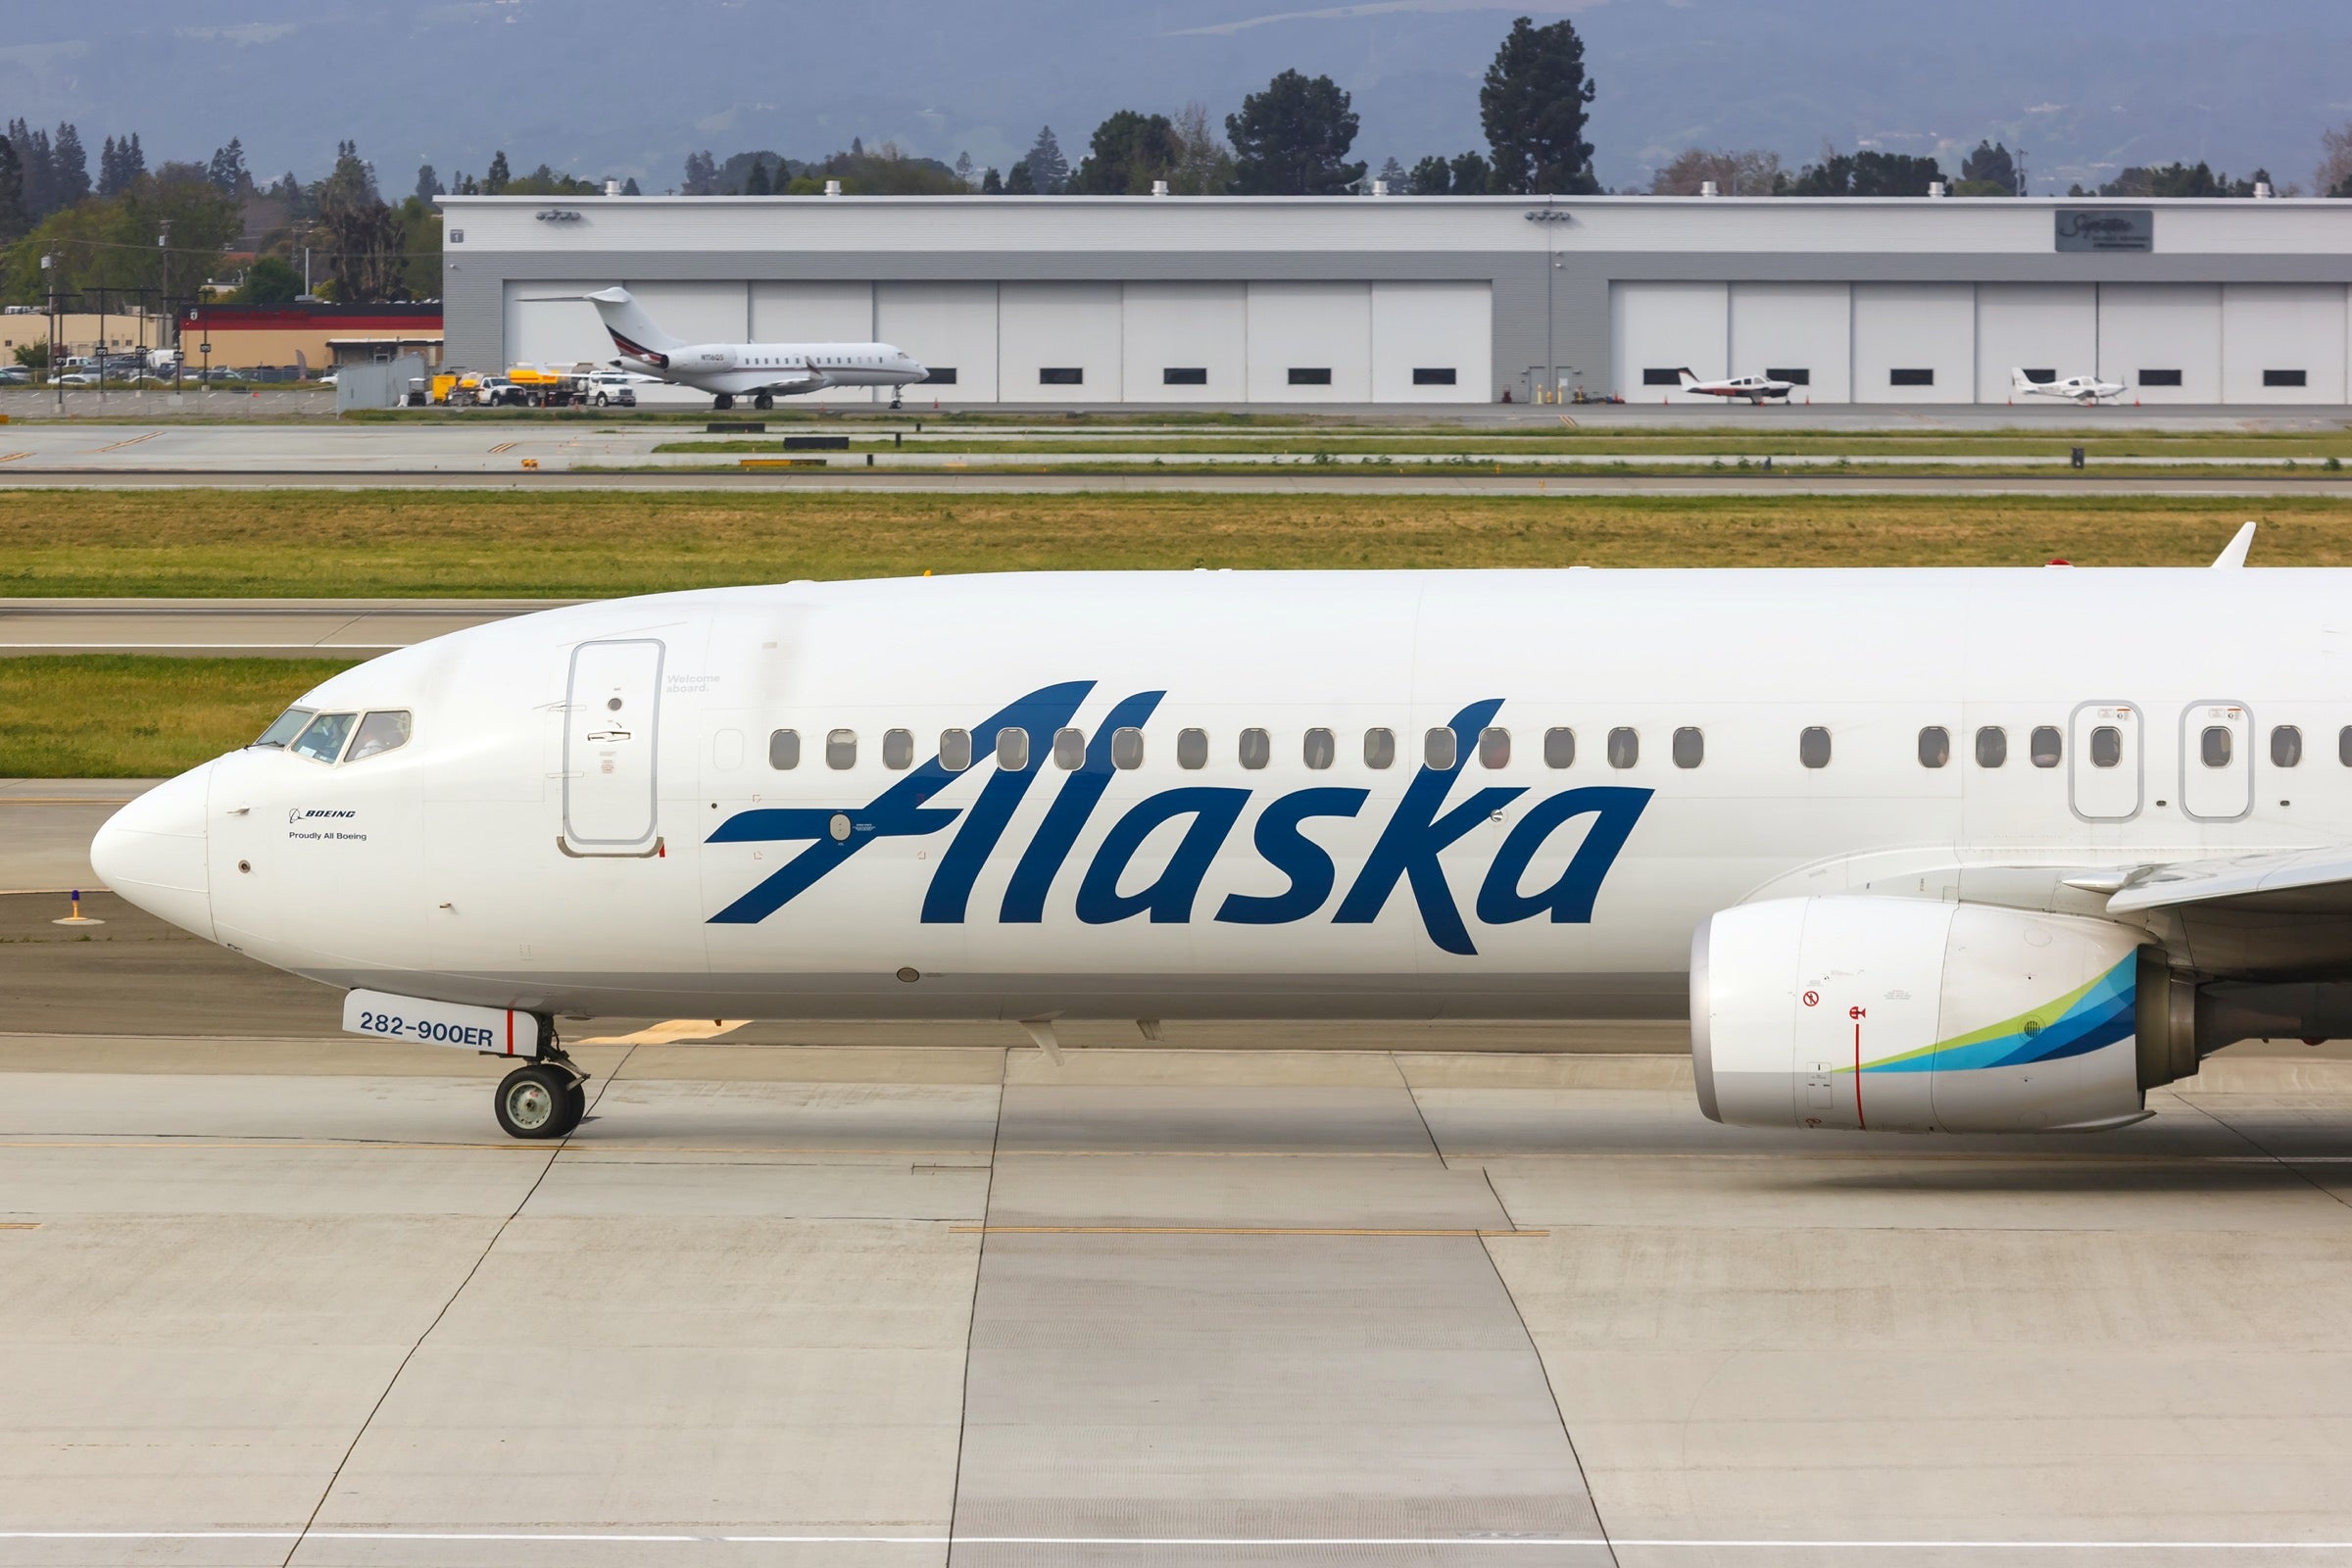 Alaska Airlines 737-900ER at San Jose airport